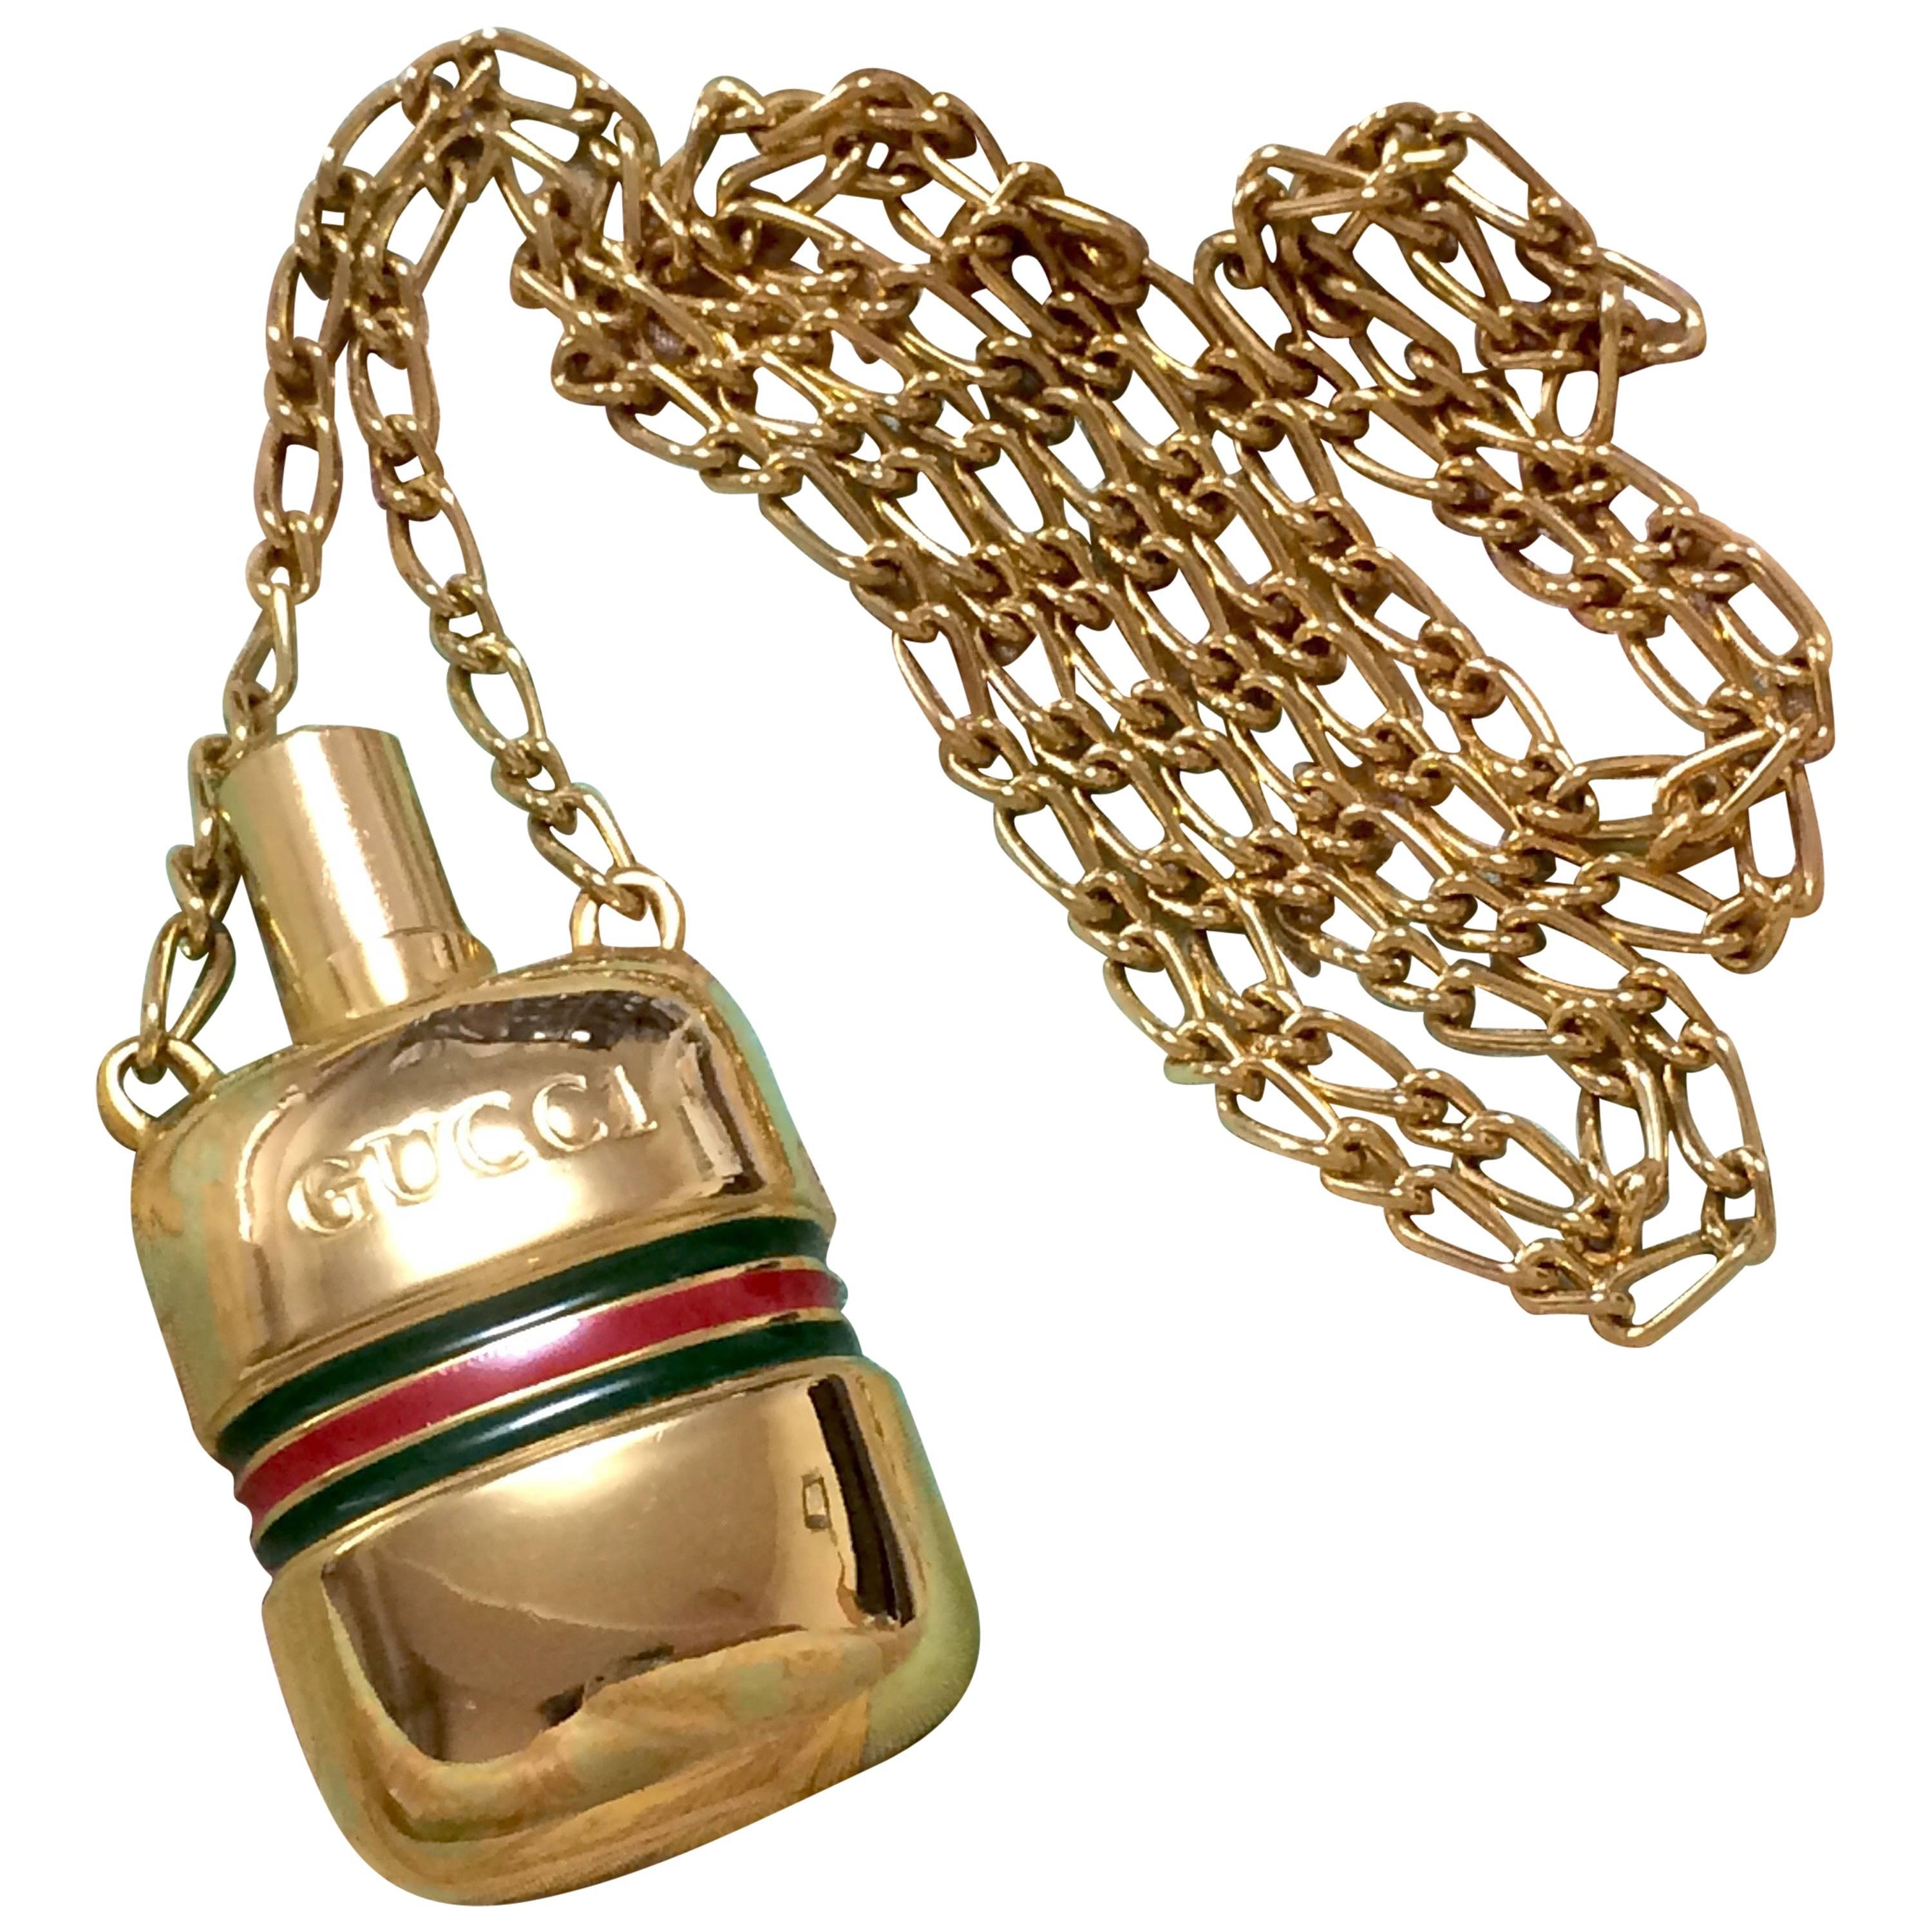 MINT. Vintage Gucci golden mini perfume bottle necklace with webbing line.